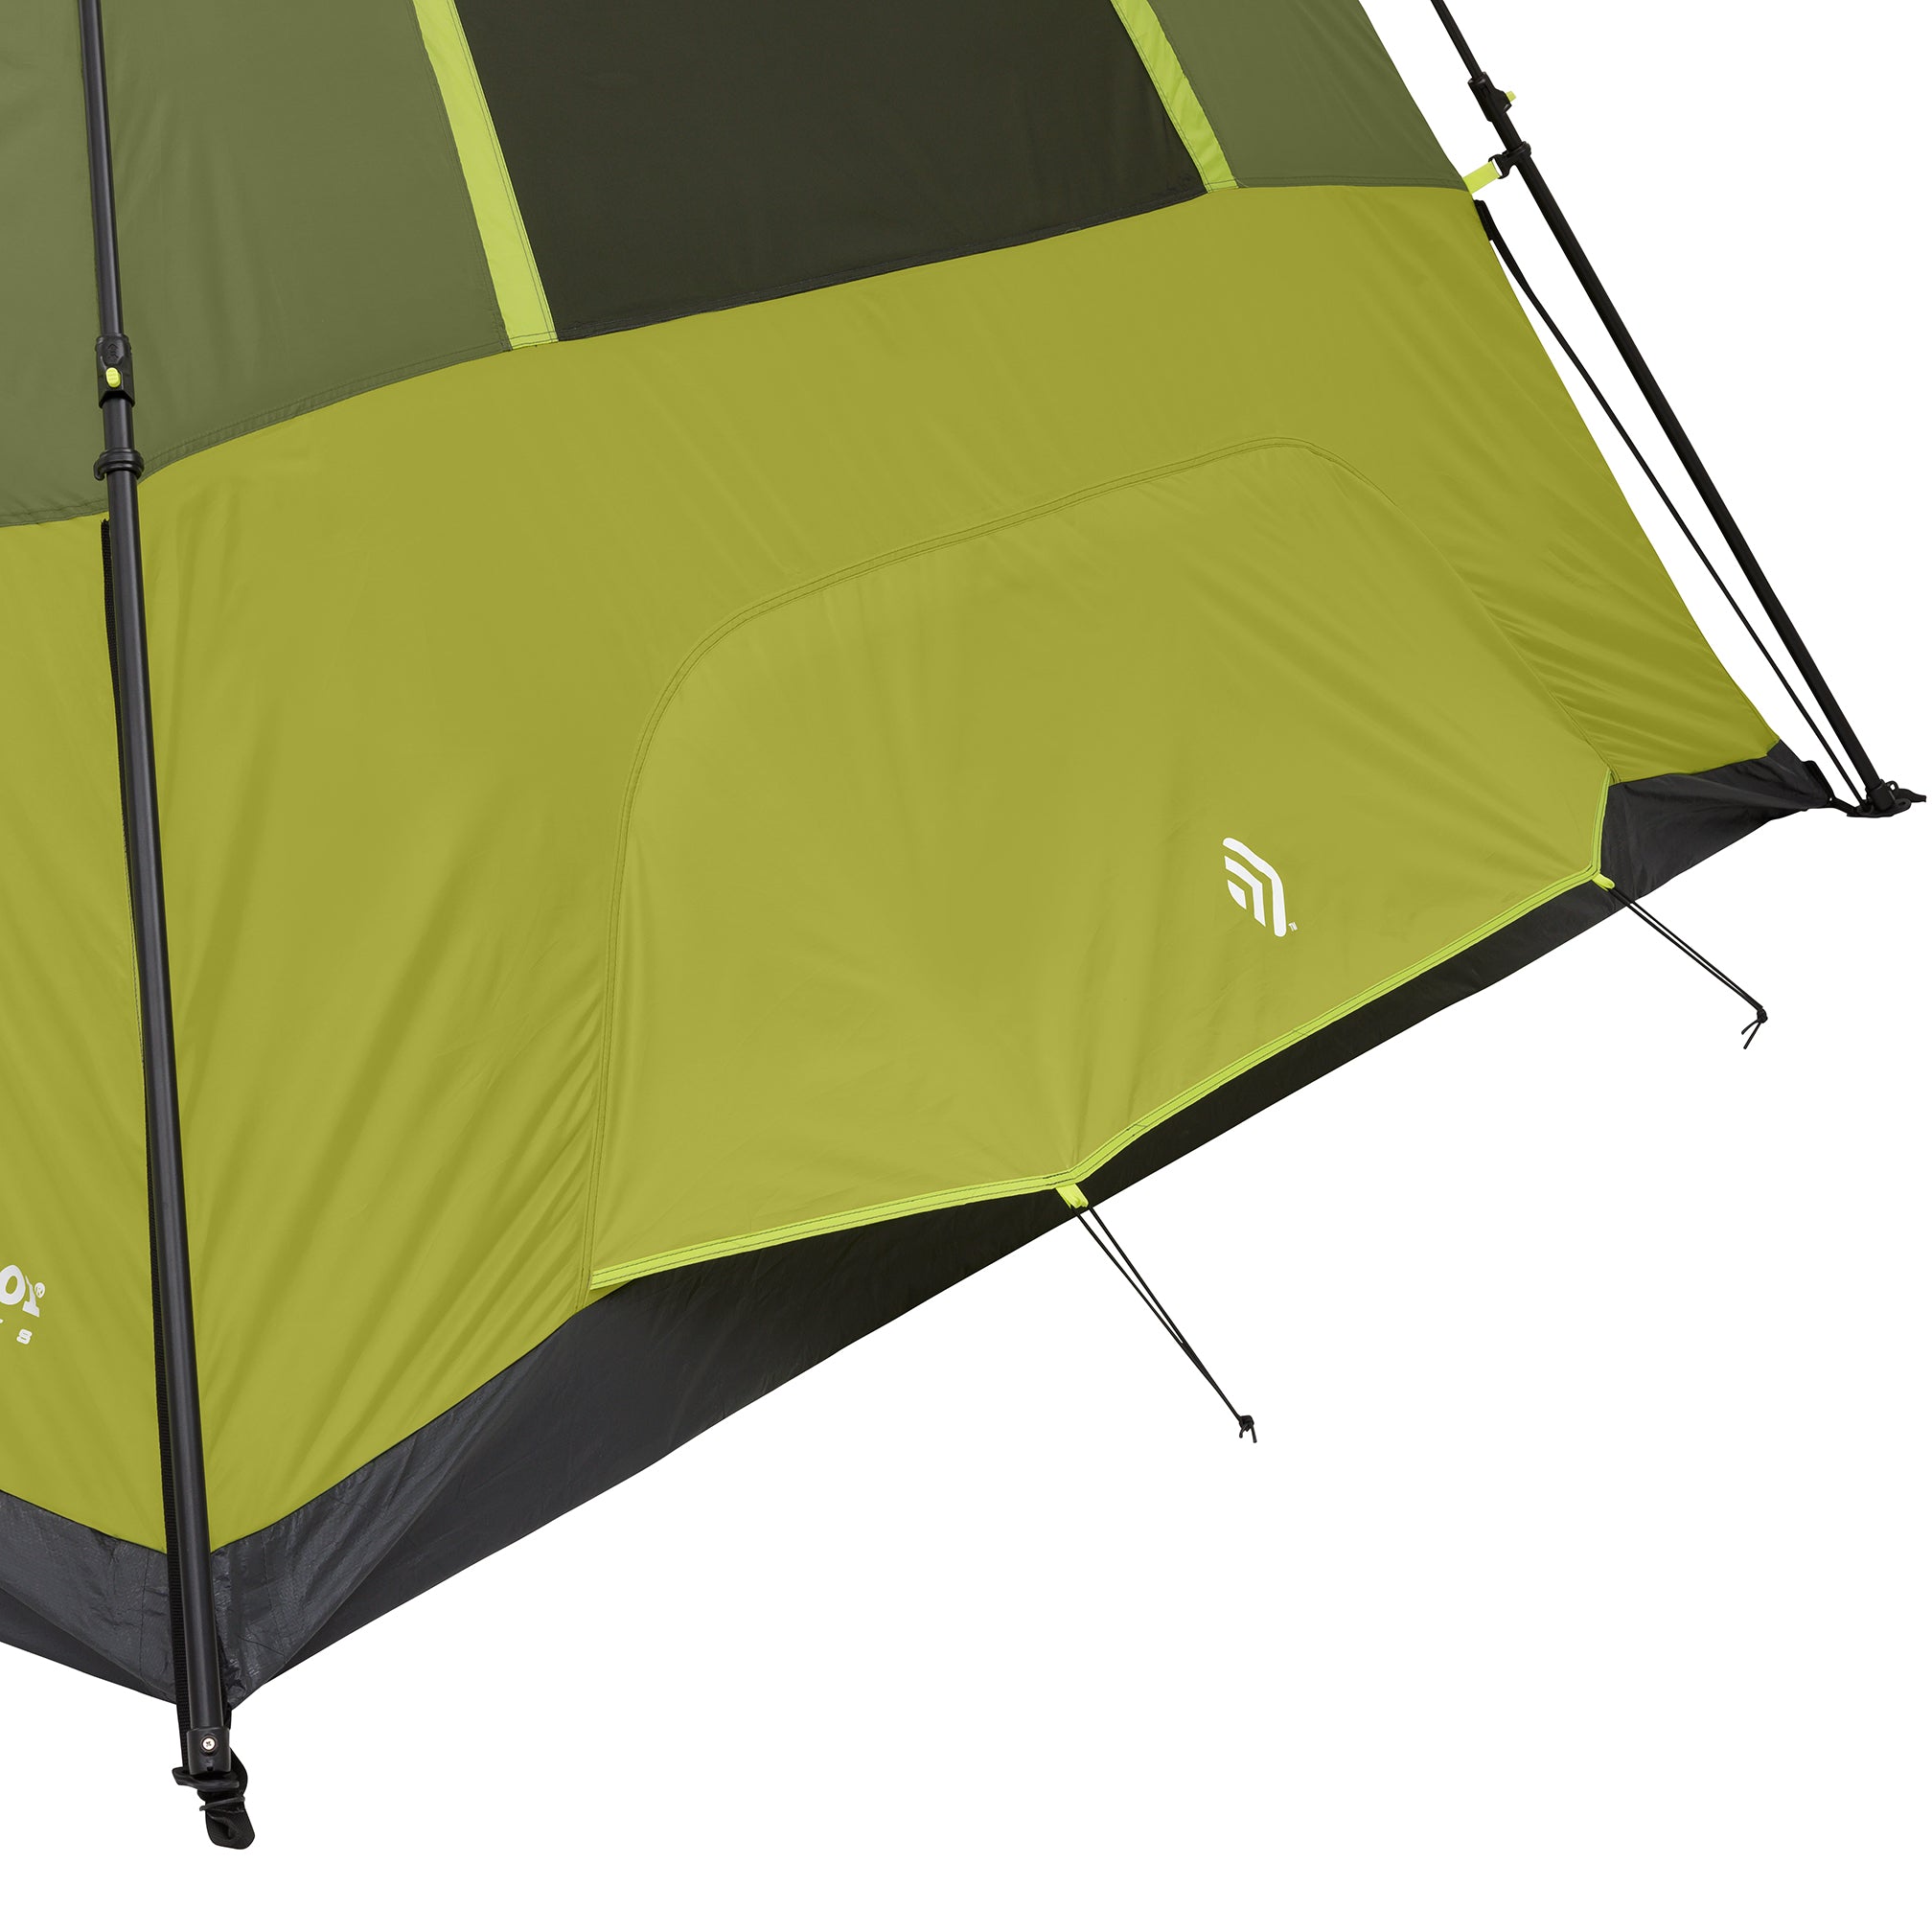 Diversen goochelaar kas 6 Person Instant Cabin Tent | Outdoor Products – Outdoor Products - Camping